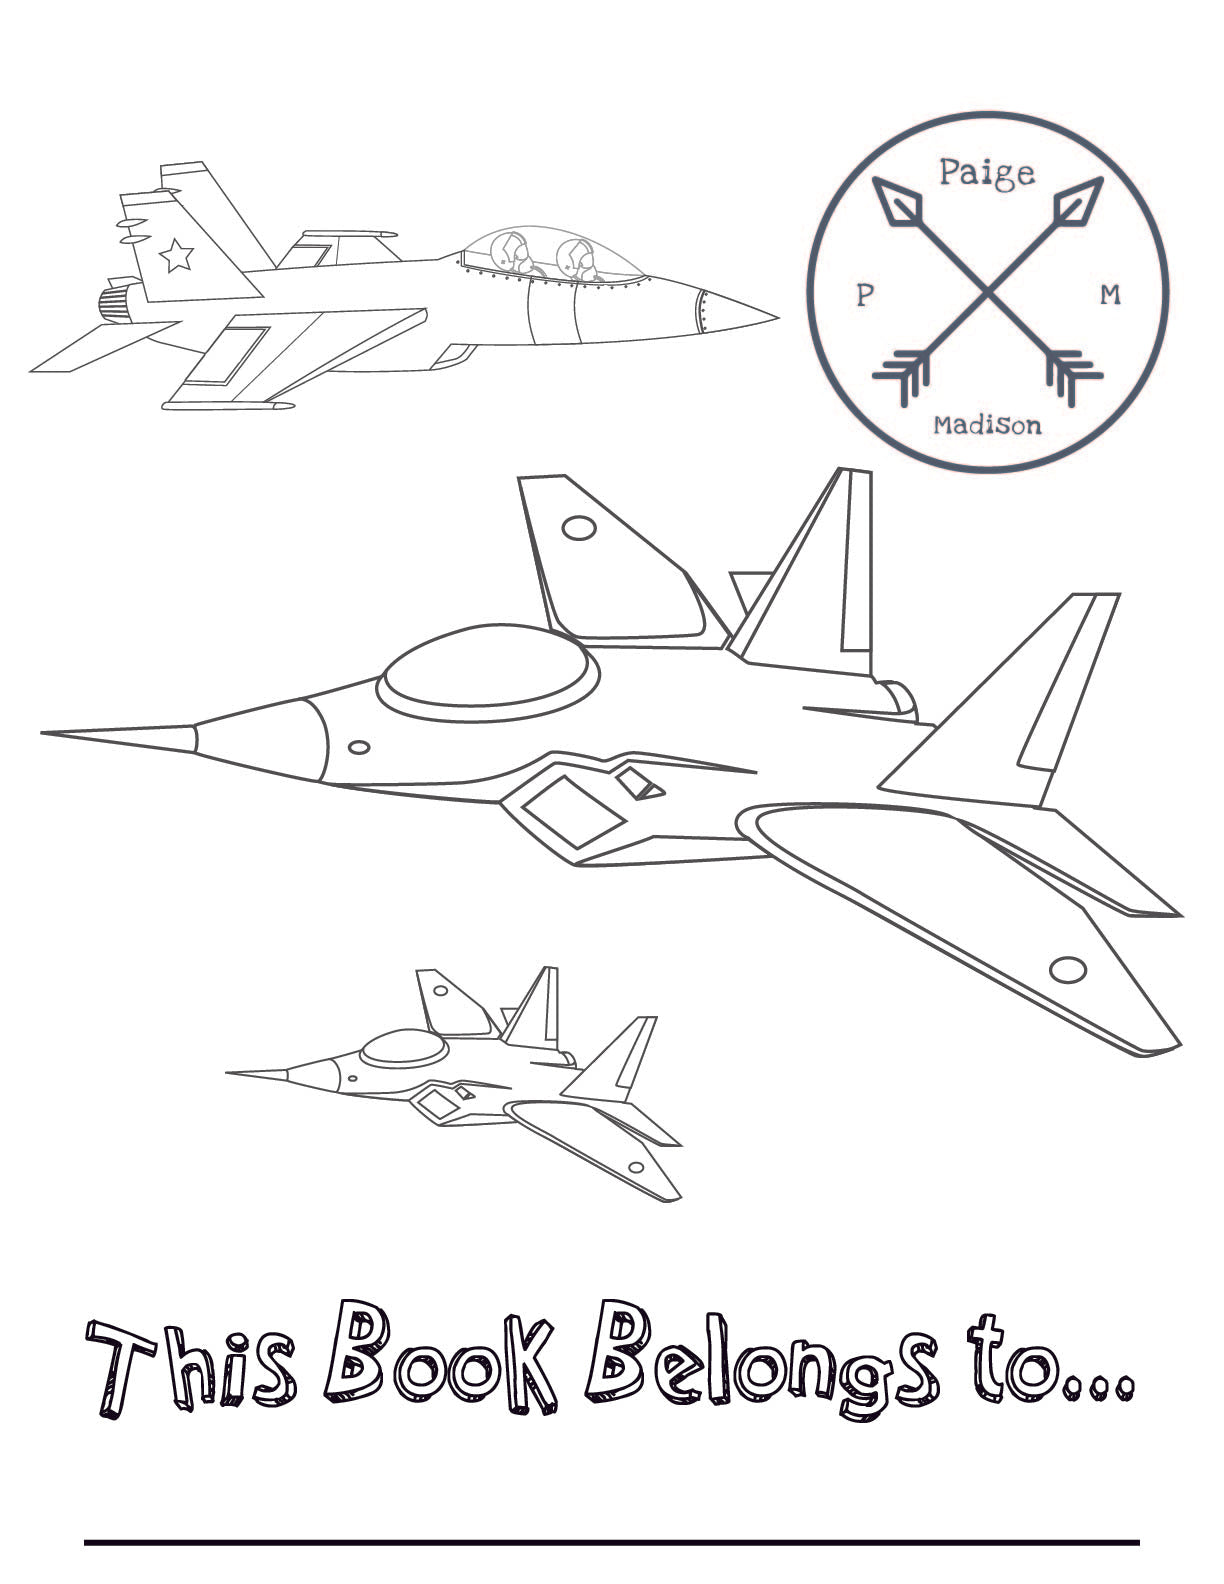 Kids Jumbo Coloring Book - Airplanes